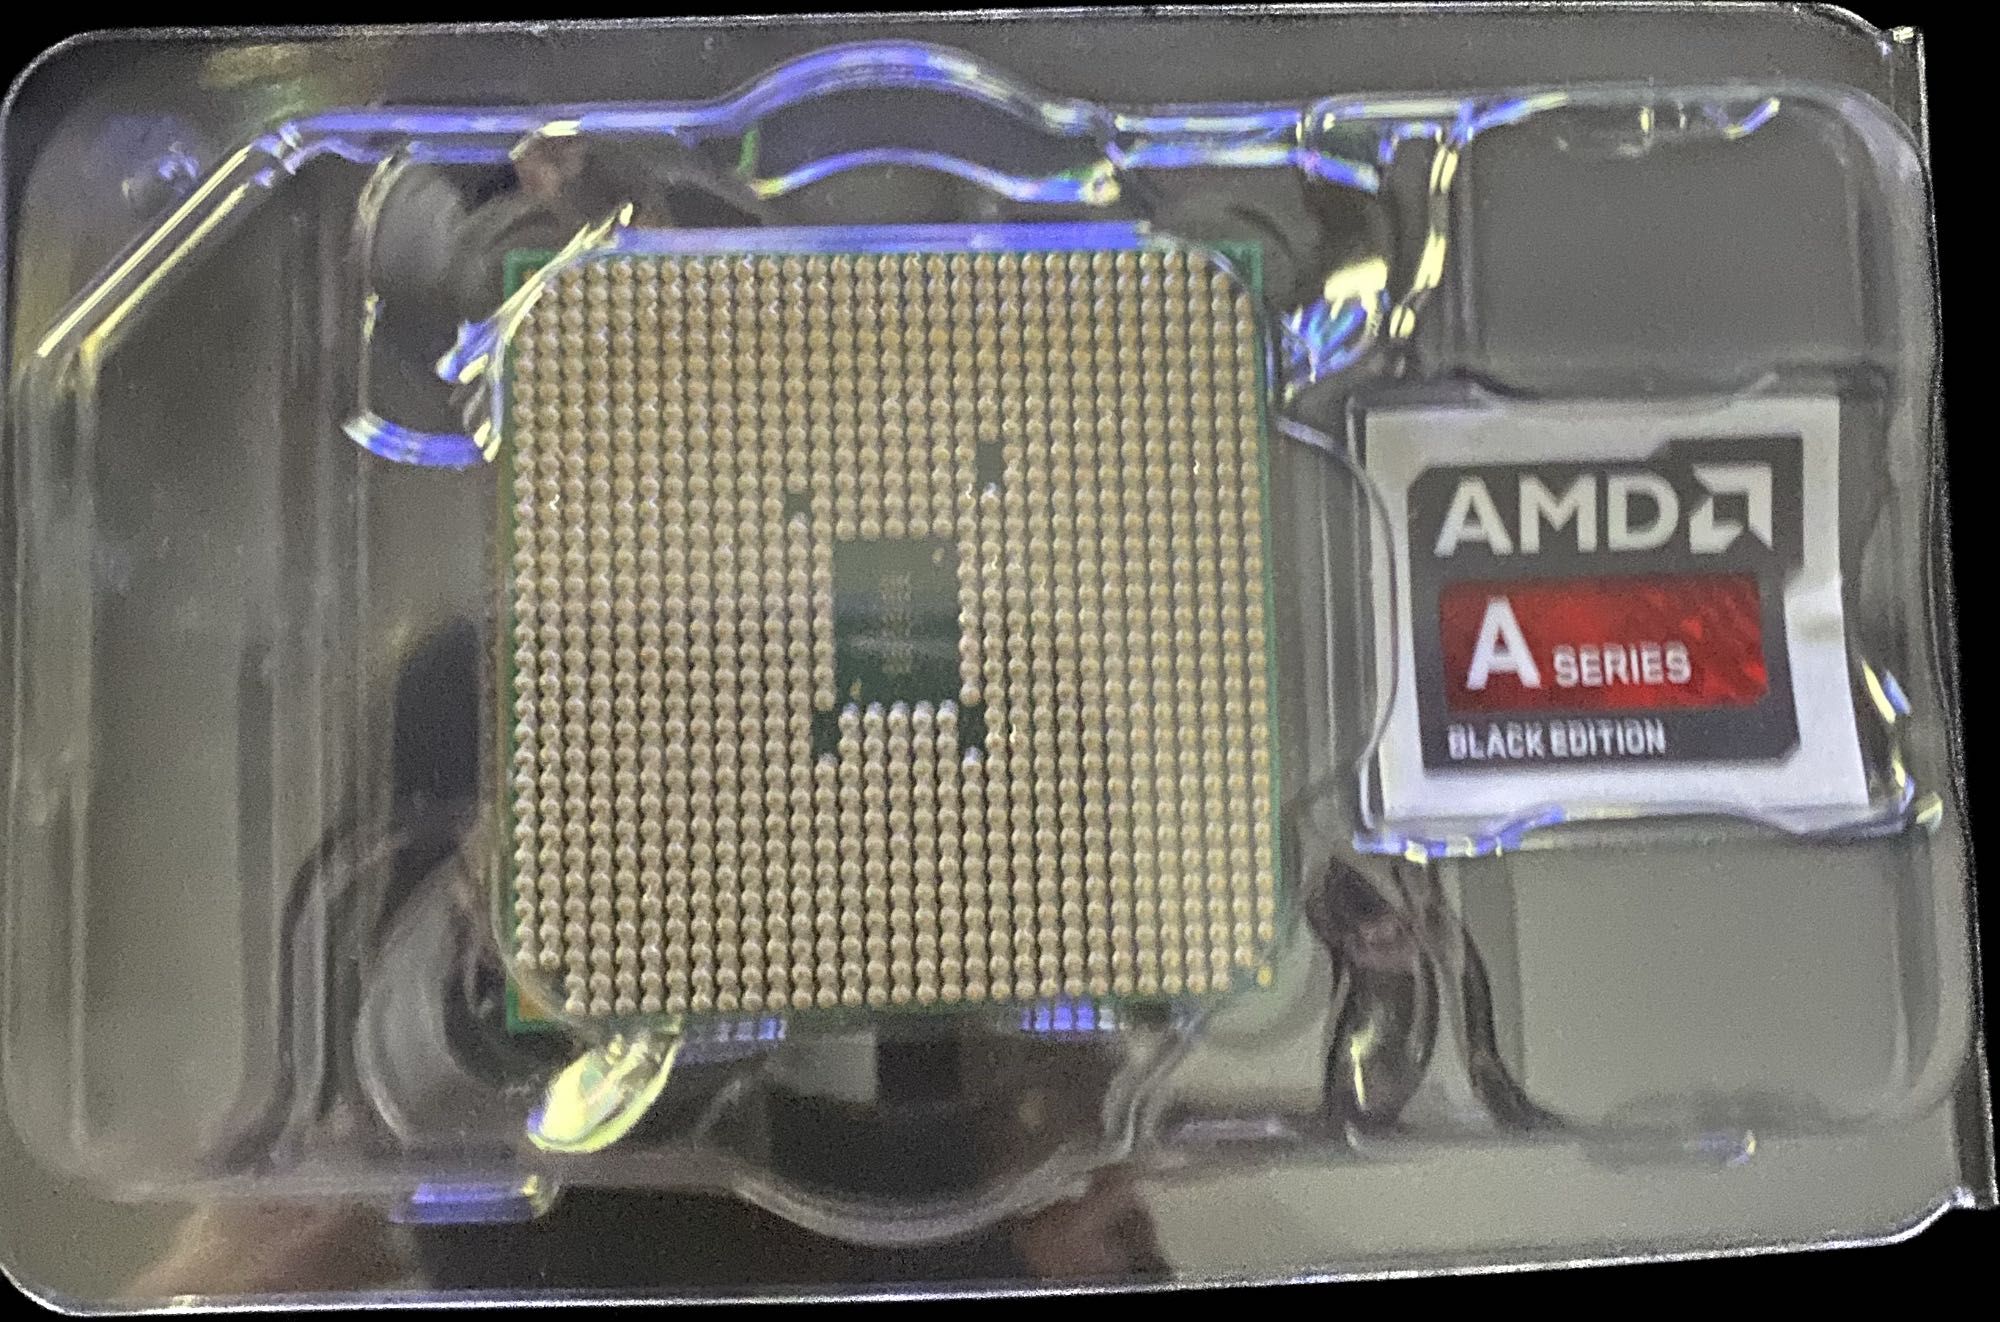 Procesor AMD A8-7650K